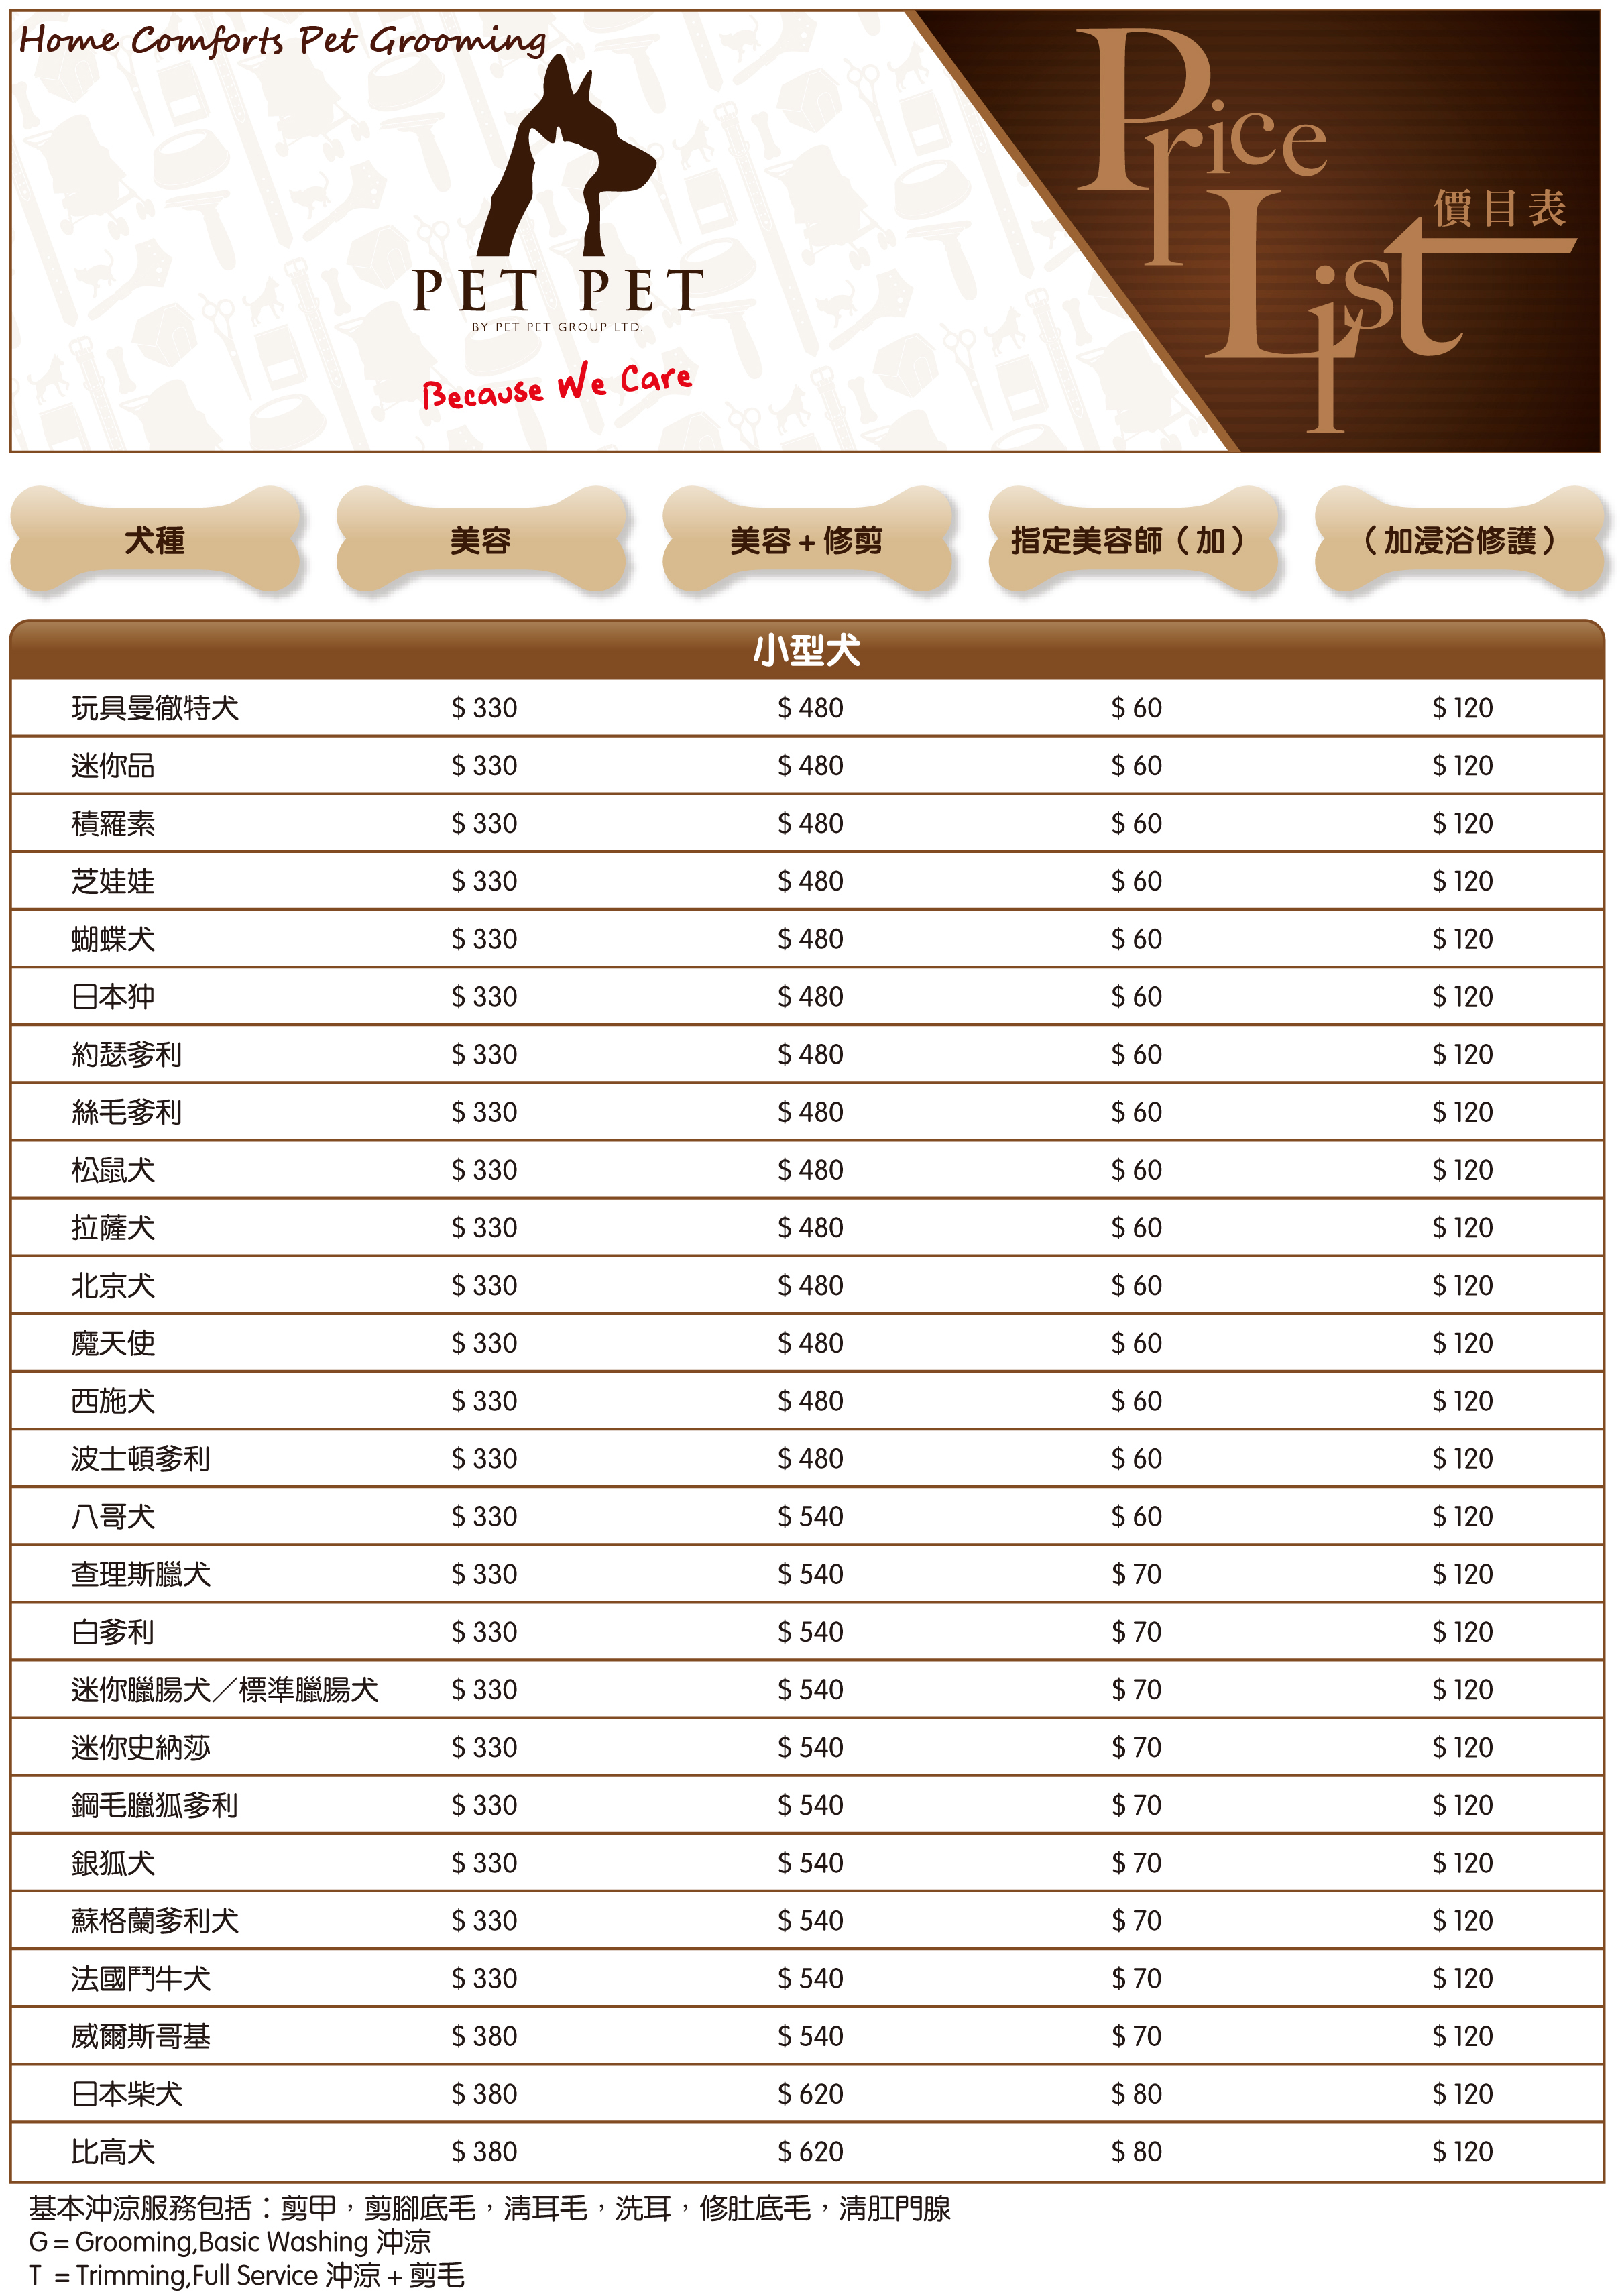 price list wypp 2014